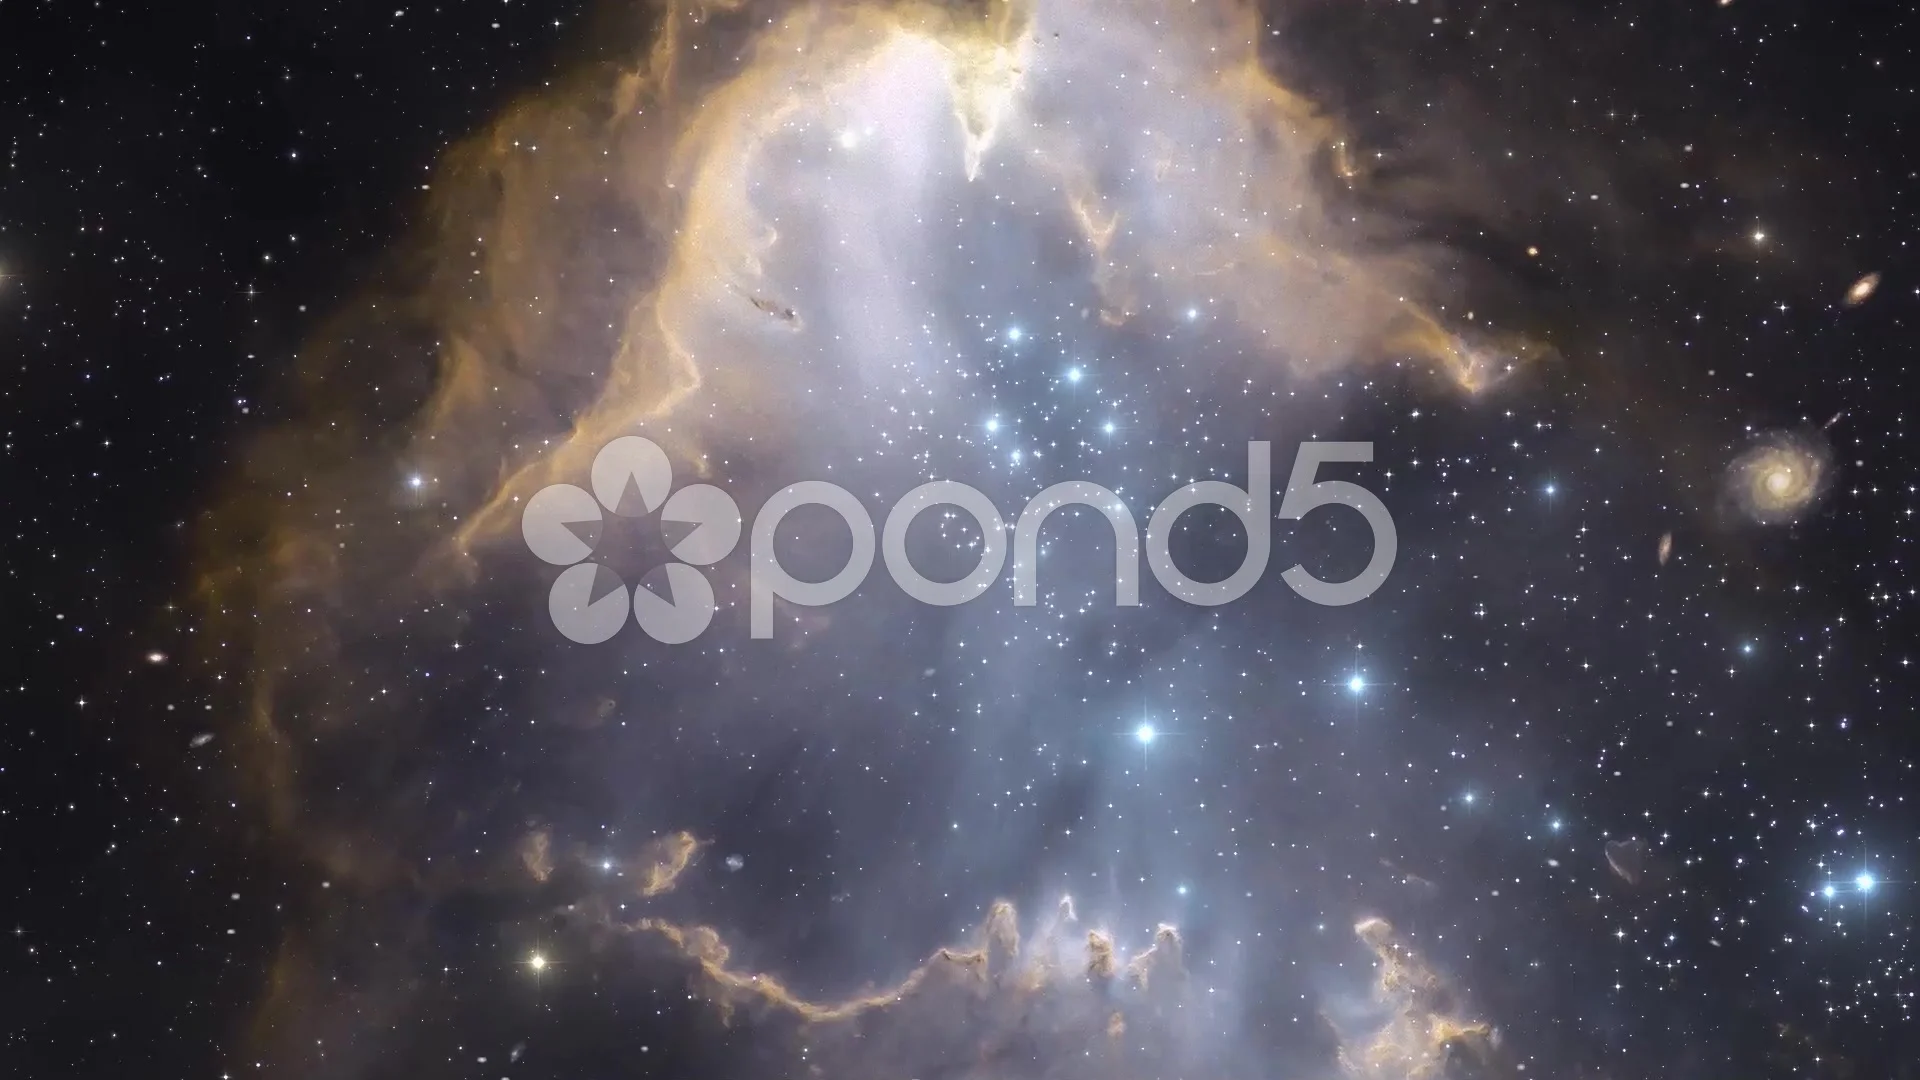 nebula flight through the cosmic clouds , Stock Video